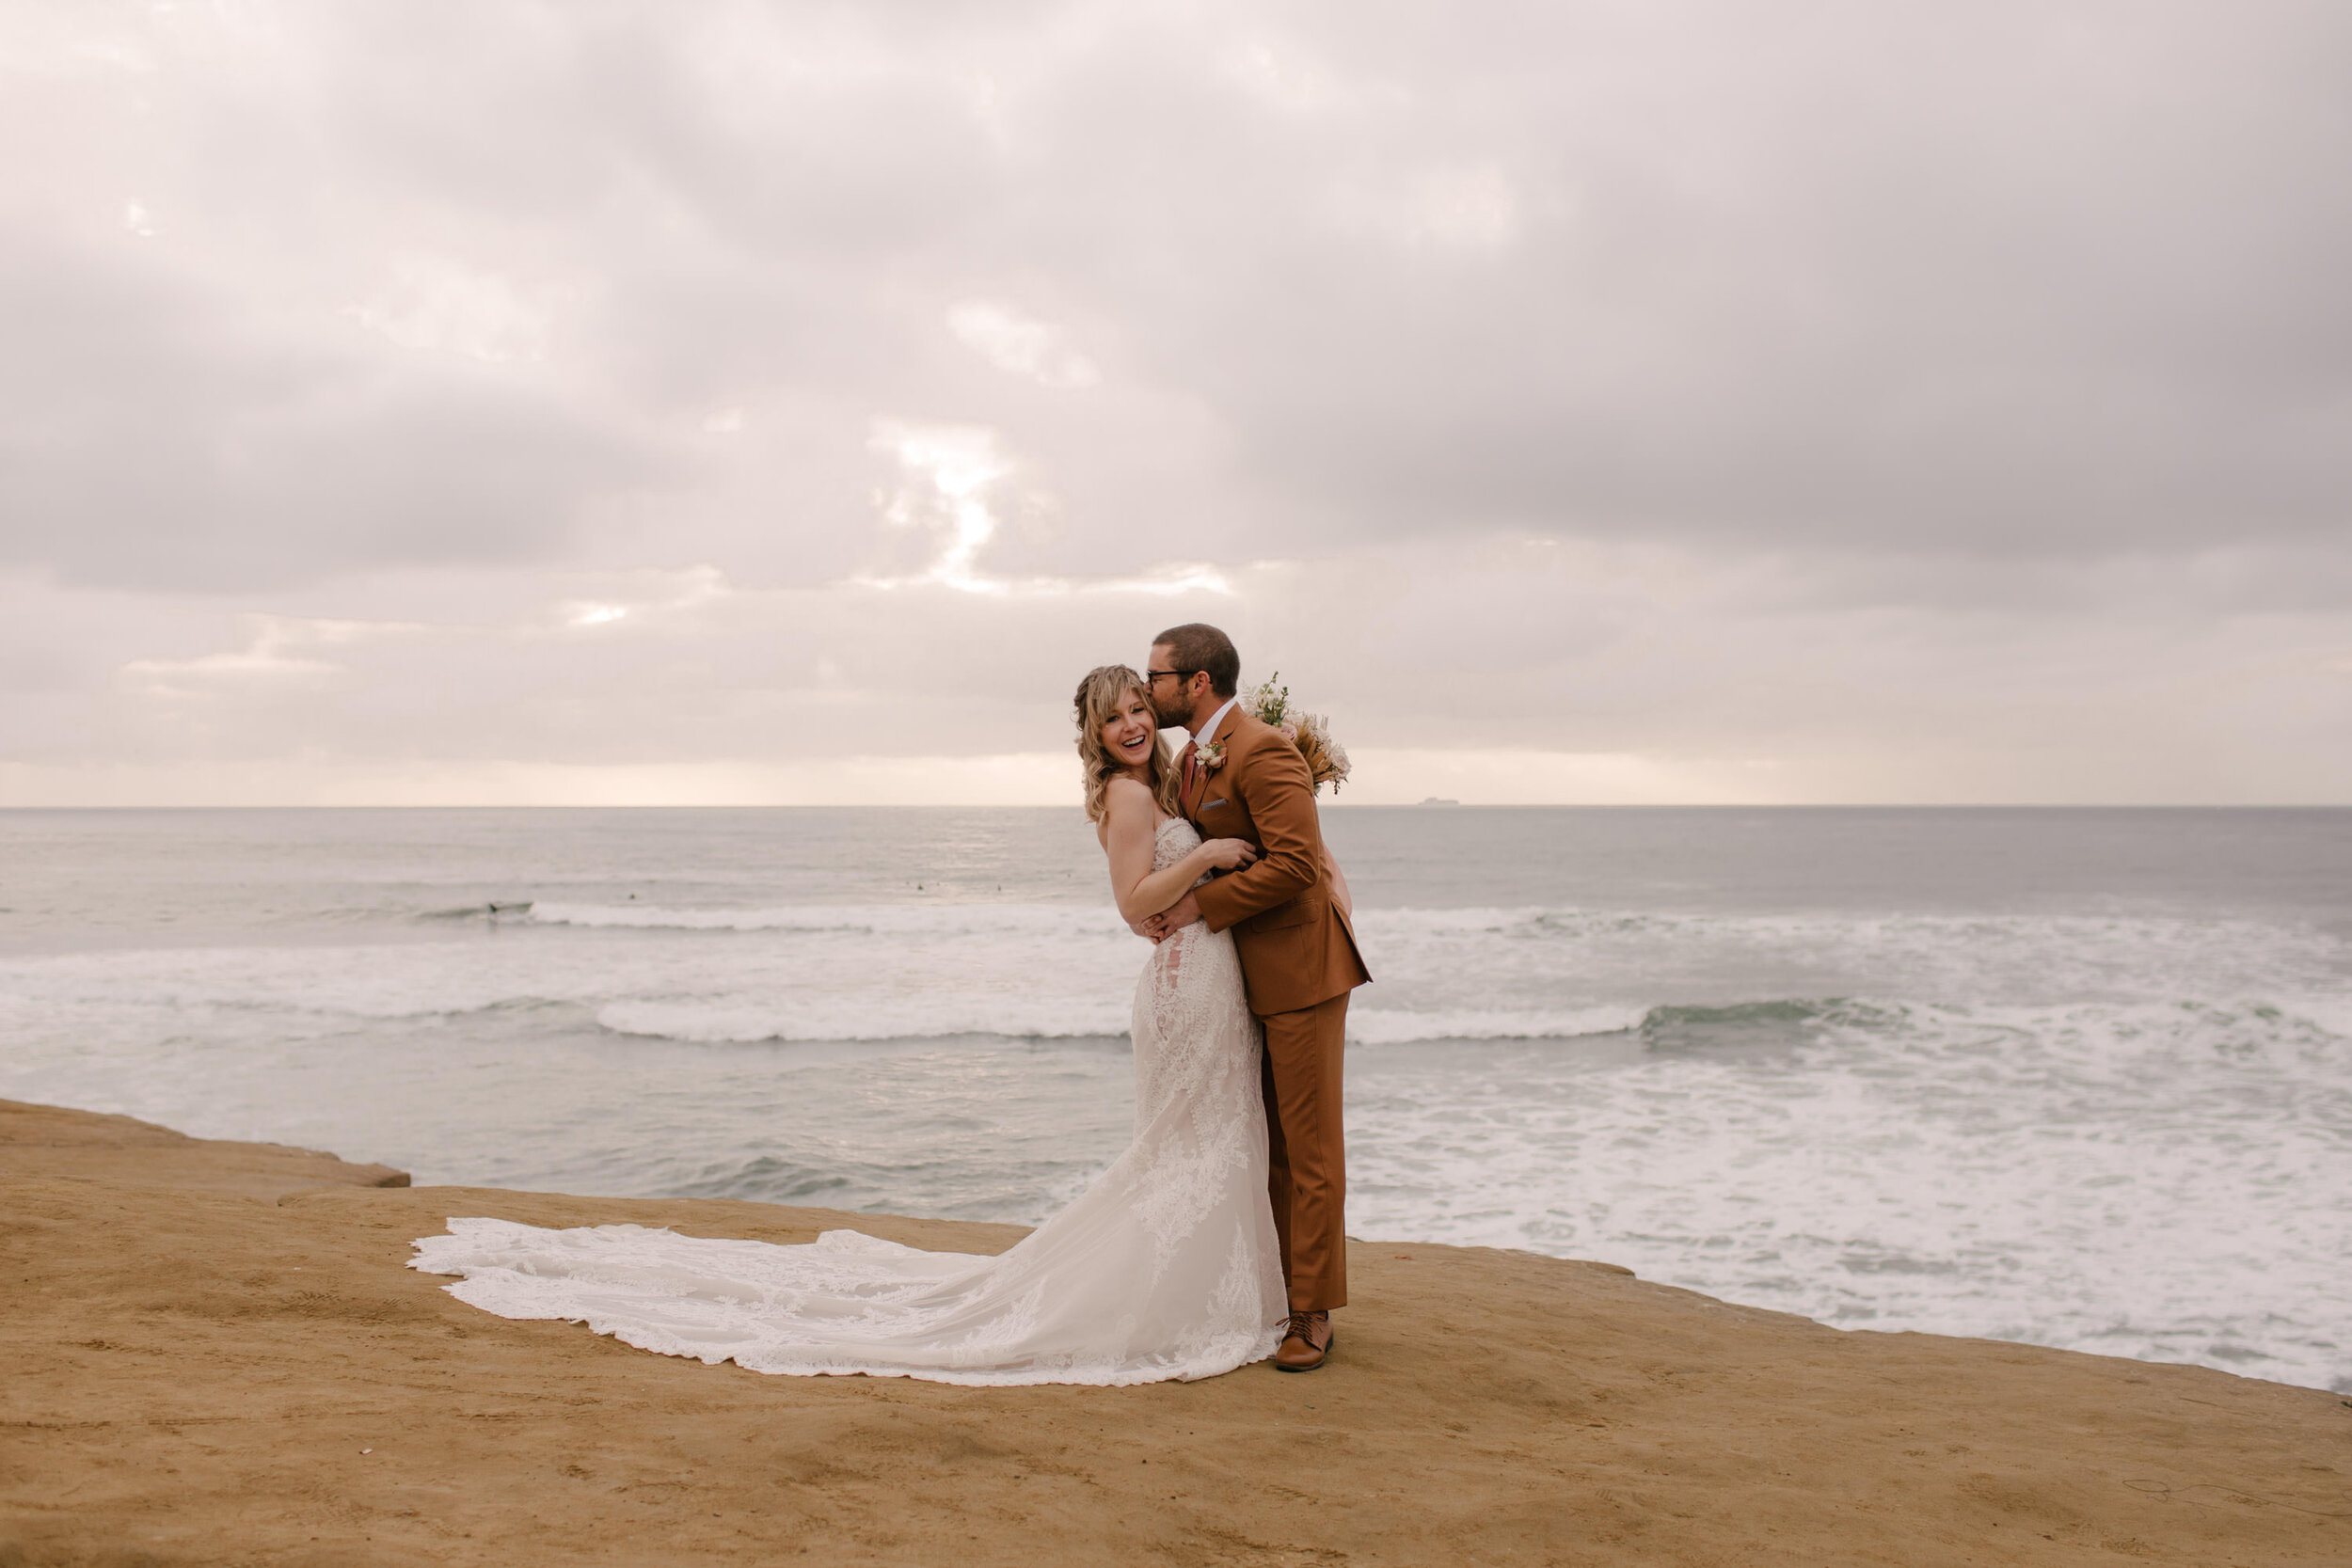 sunset-cliffs-san-diego-boho-styled-wedding-california-elopement-intimate-candid-ocean-beach-socal-photographer-9.jpg